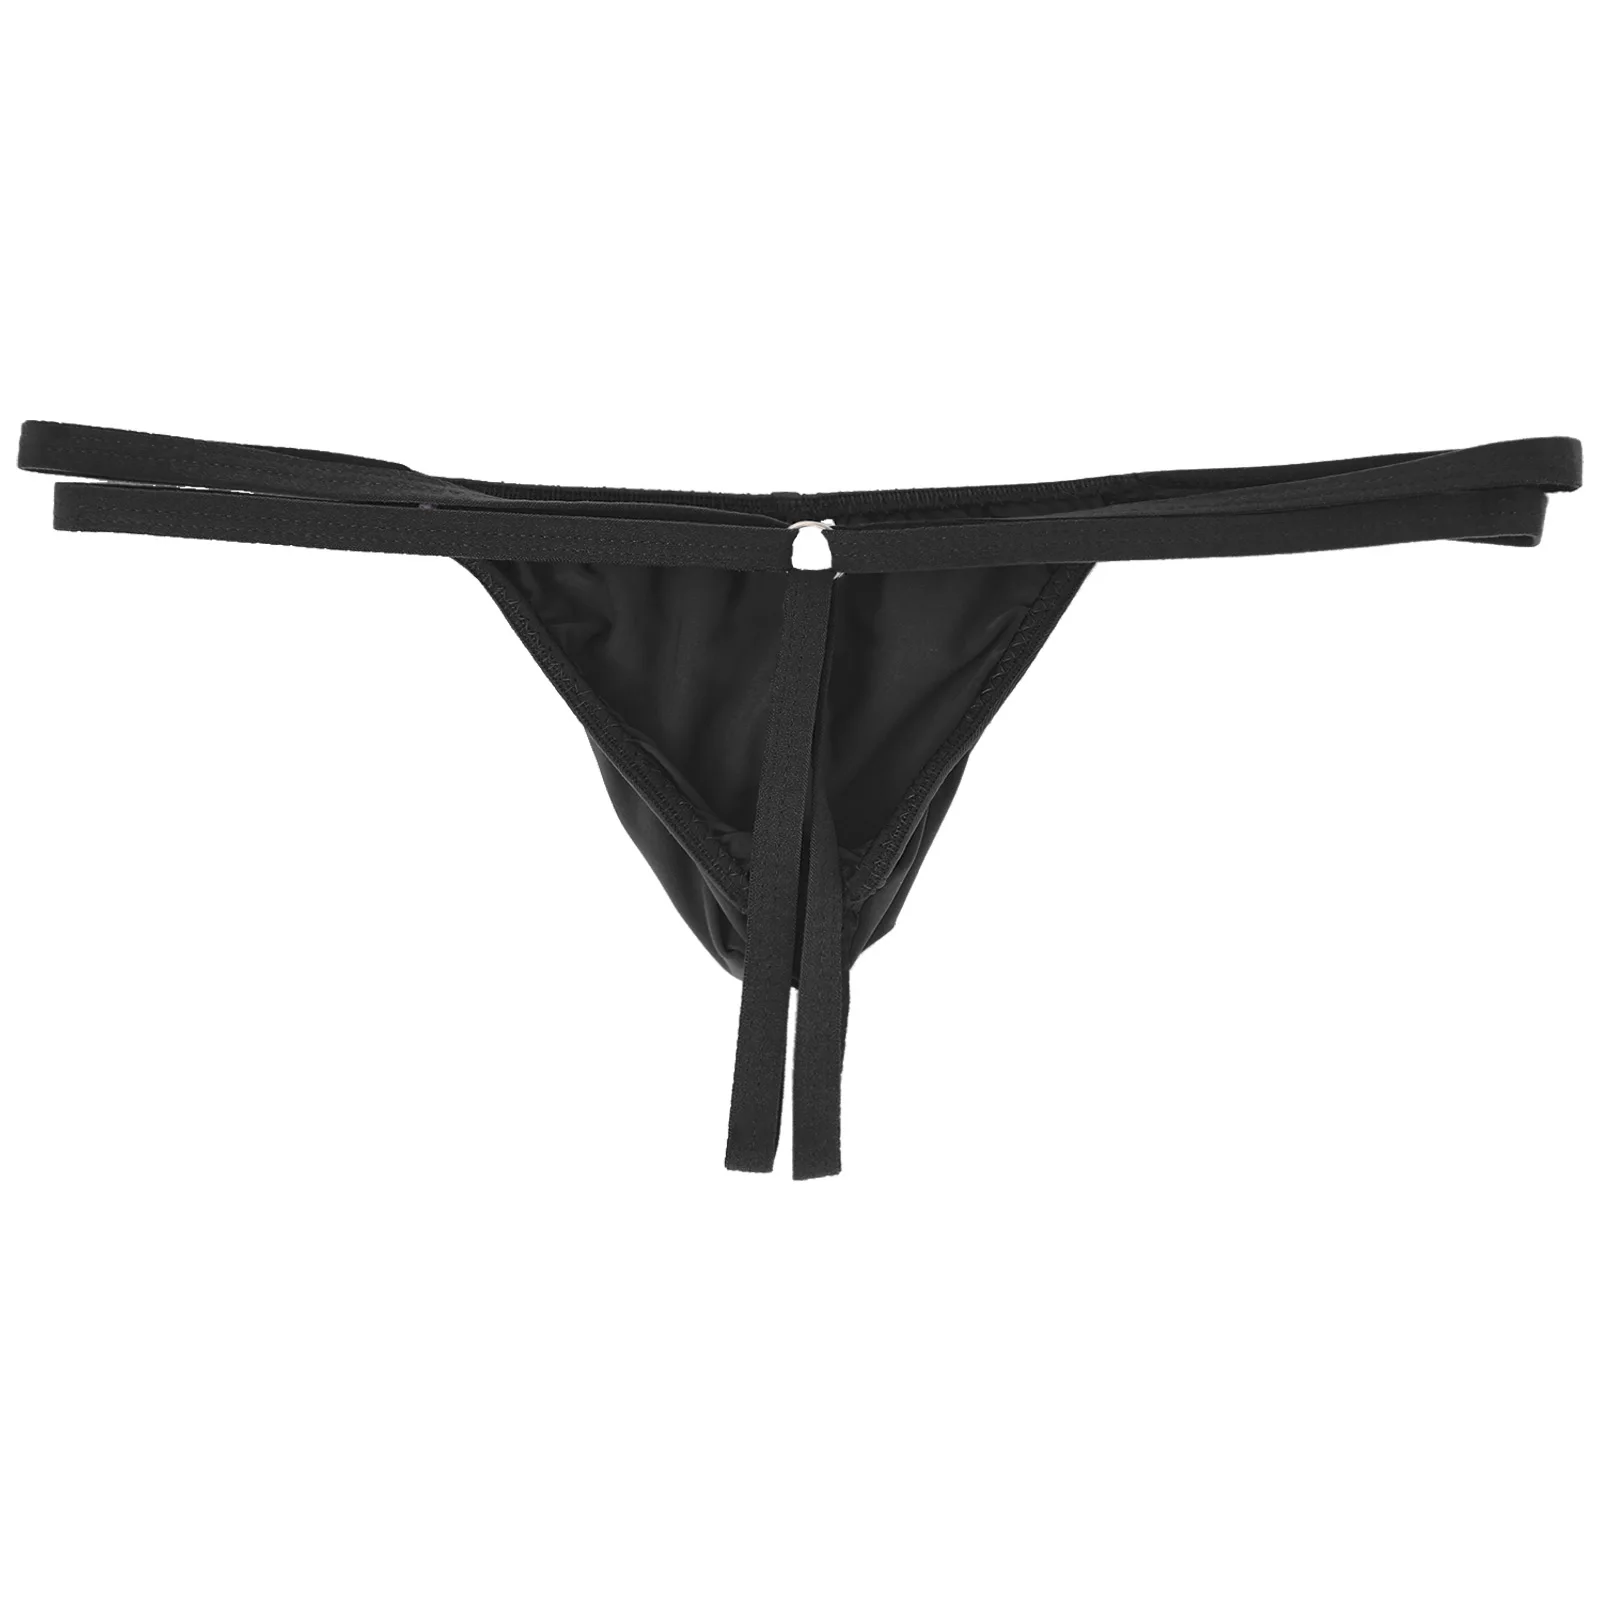 Men Underwear Briefs Low Waist Bulge Pouch G-string Thongs Male Underpants Elastic Waistband T-back Briefs Lingerie Underwear briefs for men